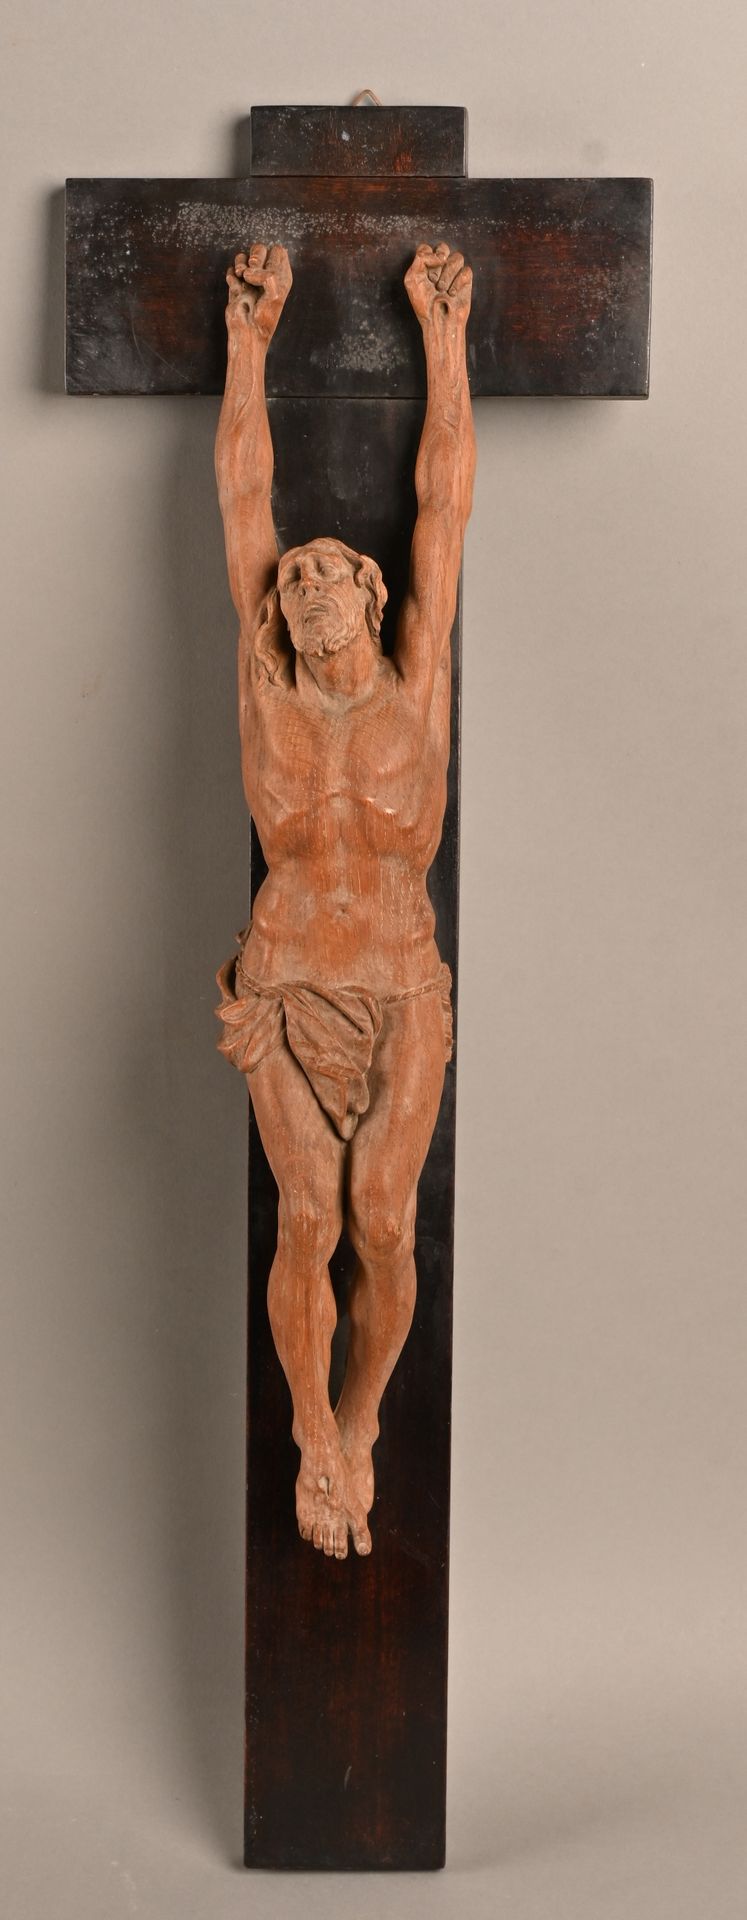 Christ janséniste en croix, 十字架上的詹森主义基督，木雕。
基督的高度：50厘米